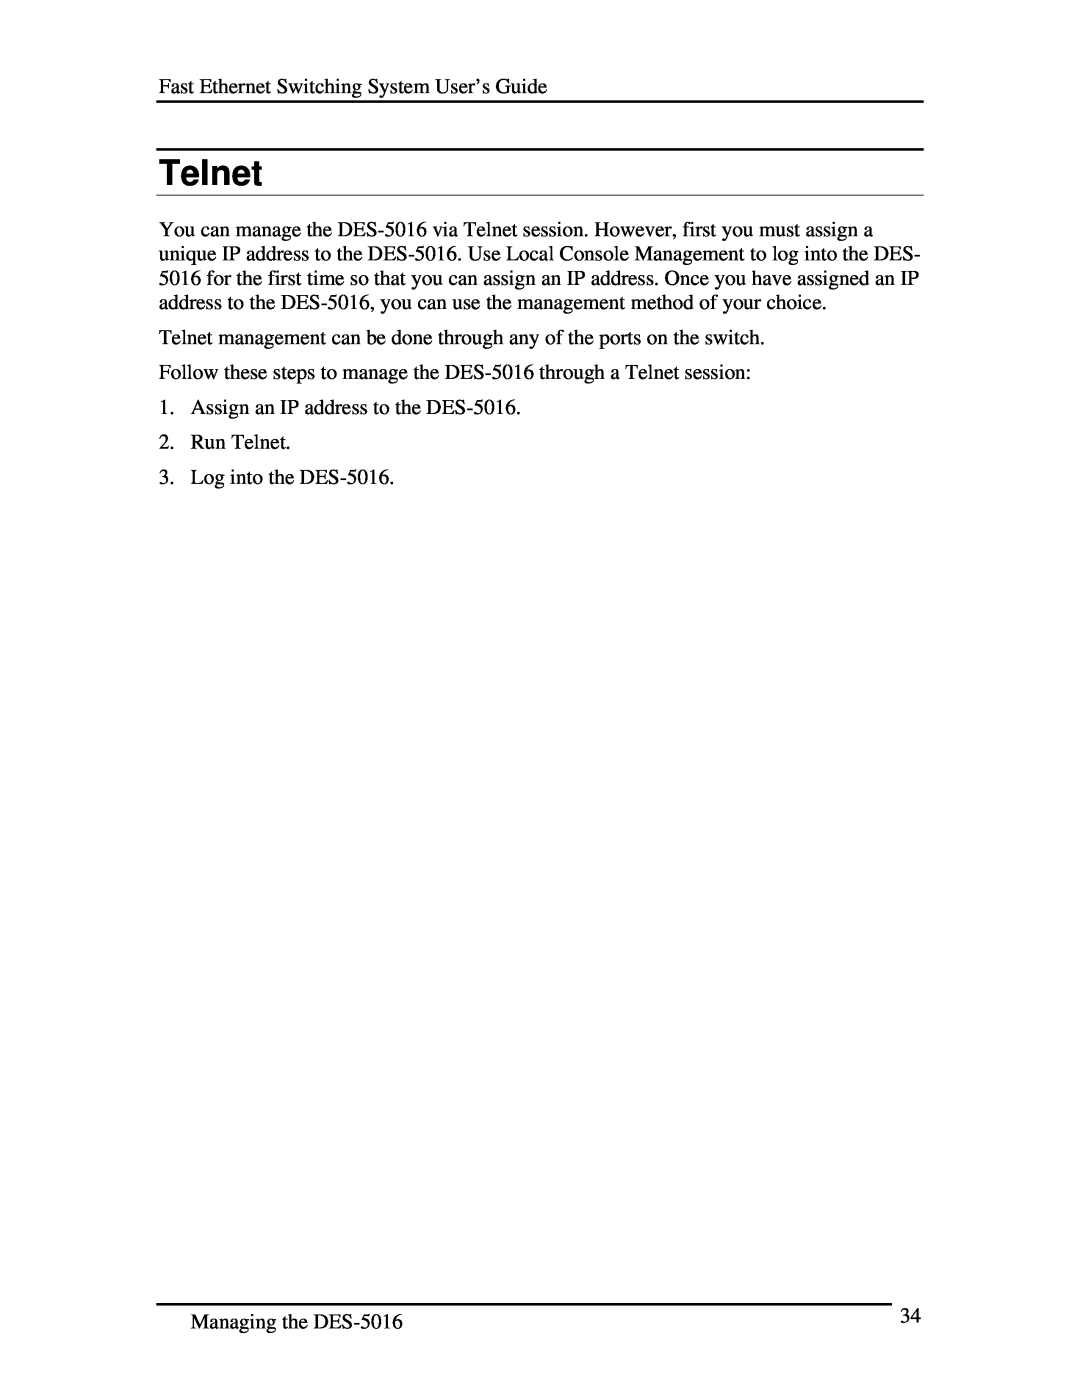 D-Link DES-5016 manual Telnet 